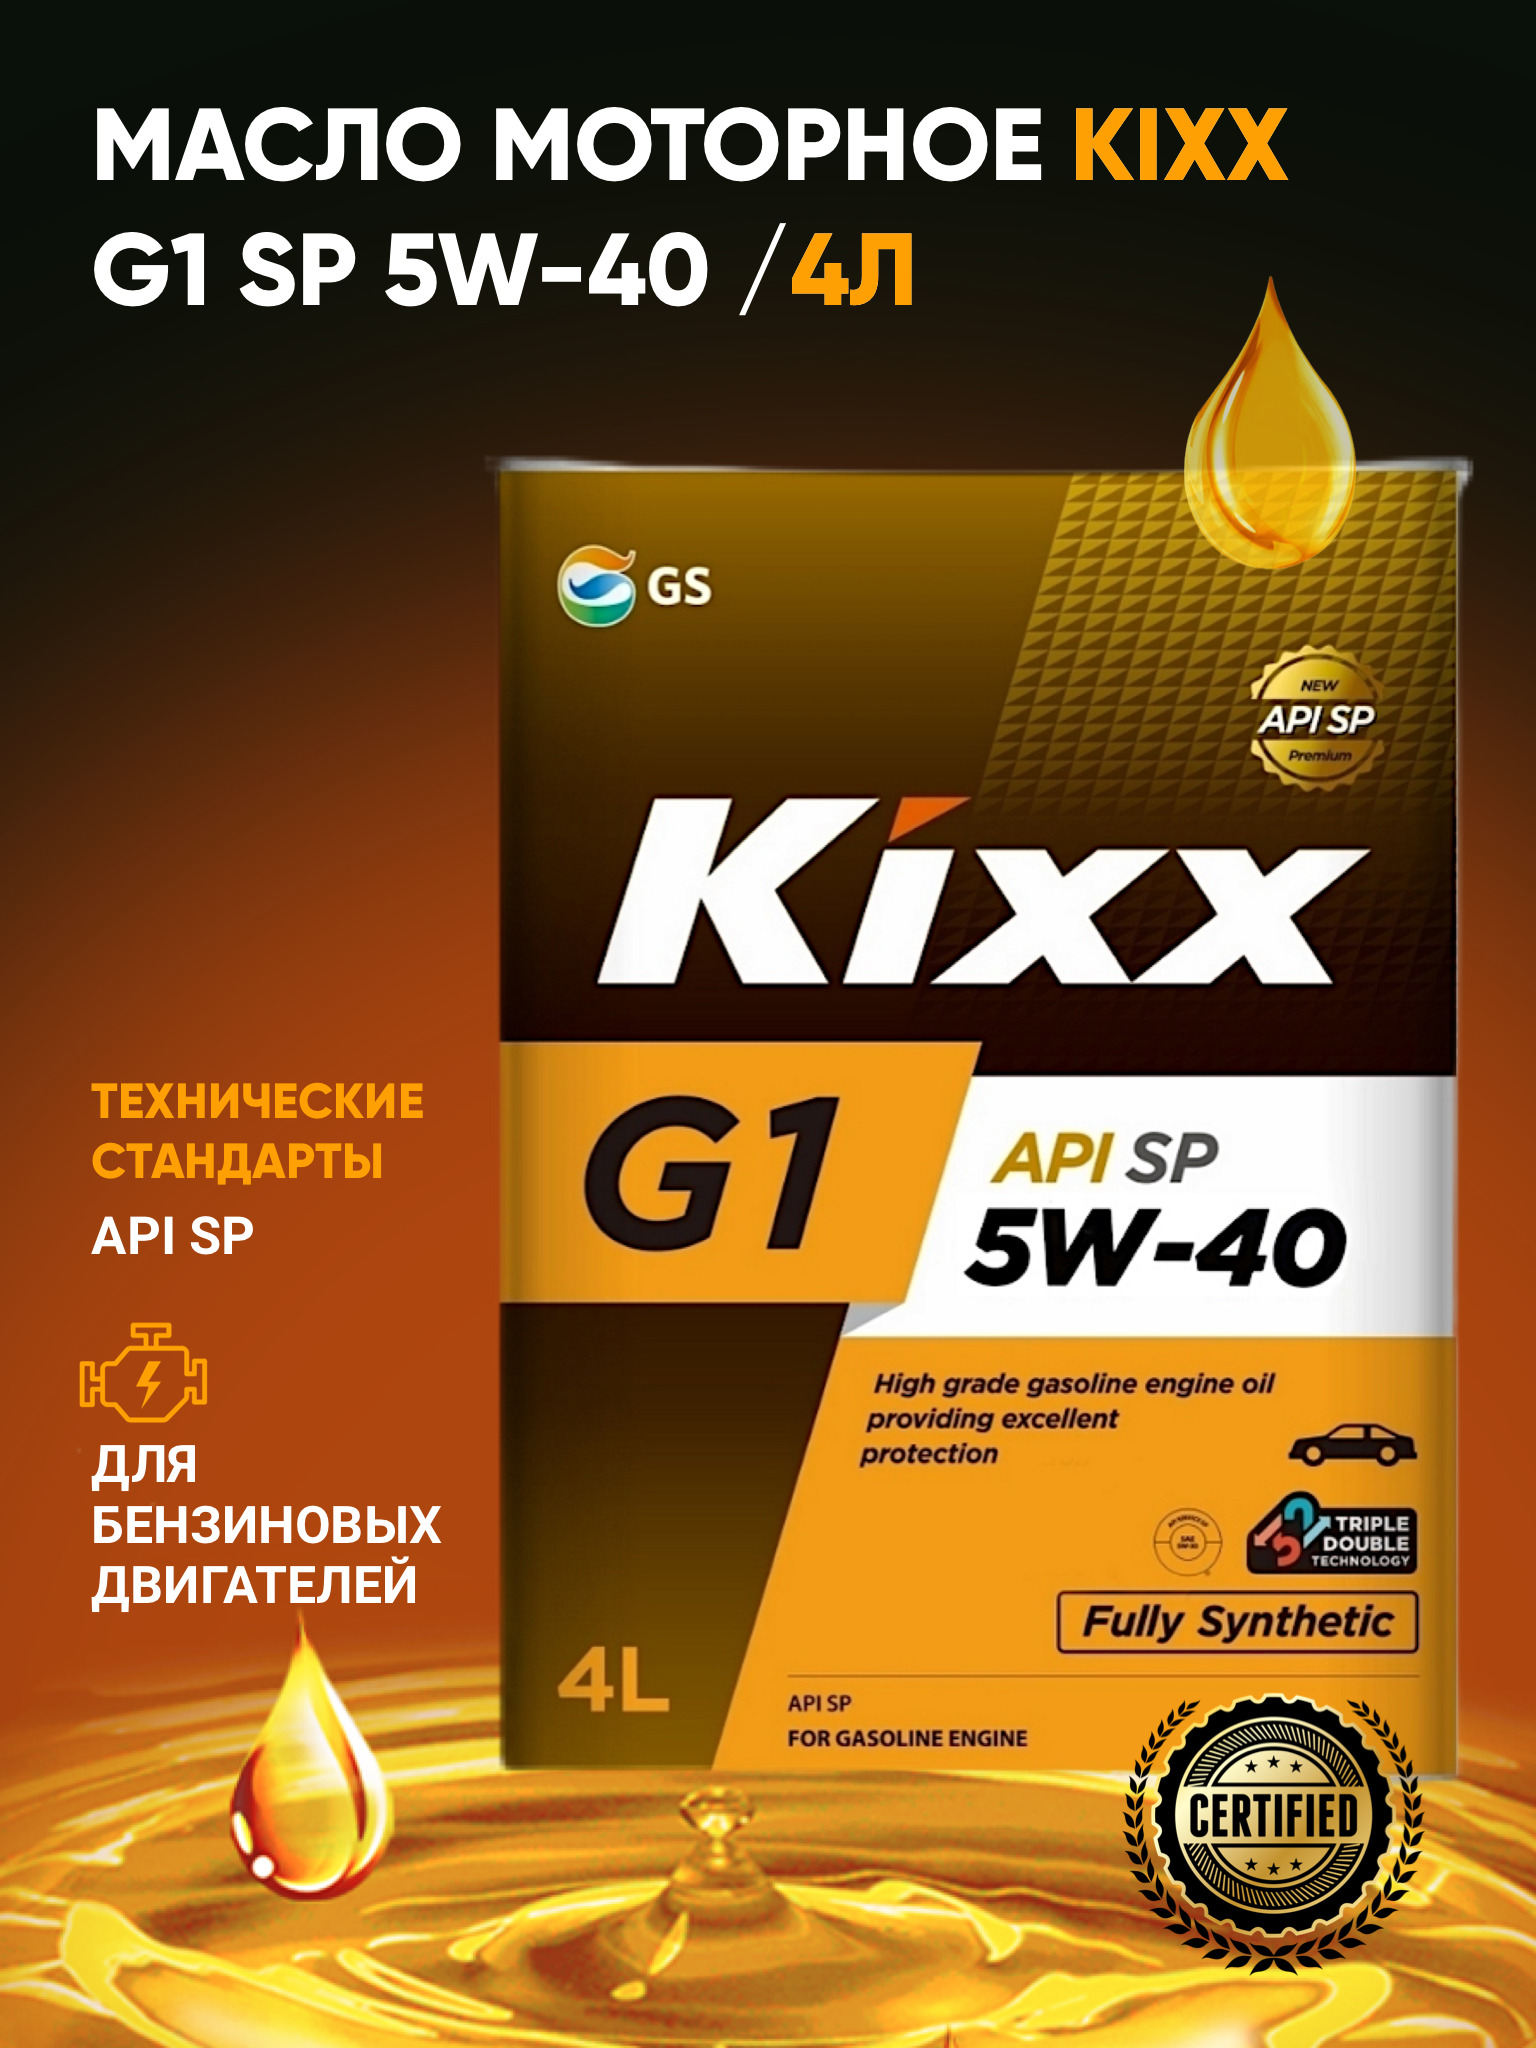 Моторное масло кикс 5w40 отзывы. Kixx g1 SP 5w-40. Kixx g1 SP 5w-30. Kixx 5w30 SP. Масло моторное Kixx 5w-40 g1 SP.